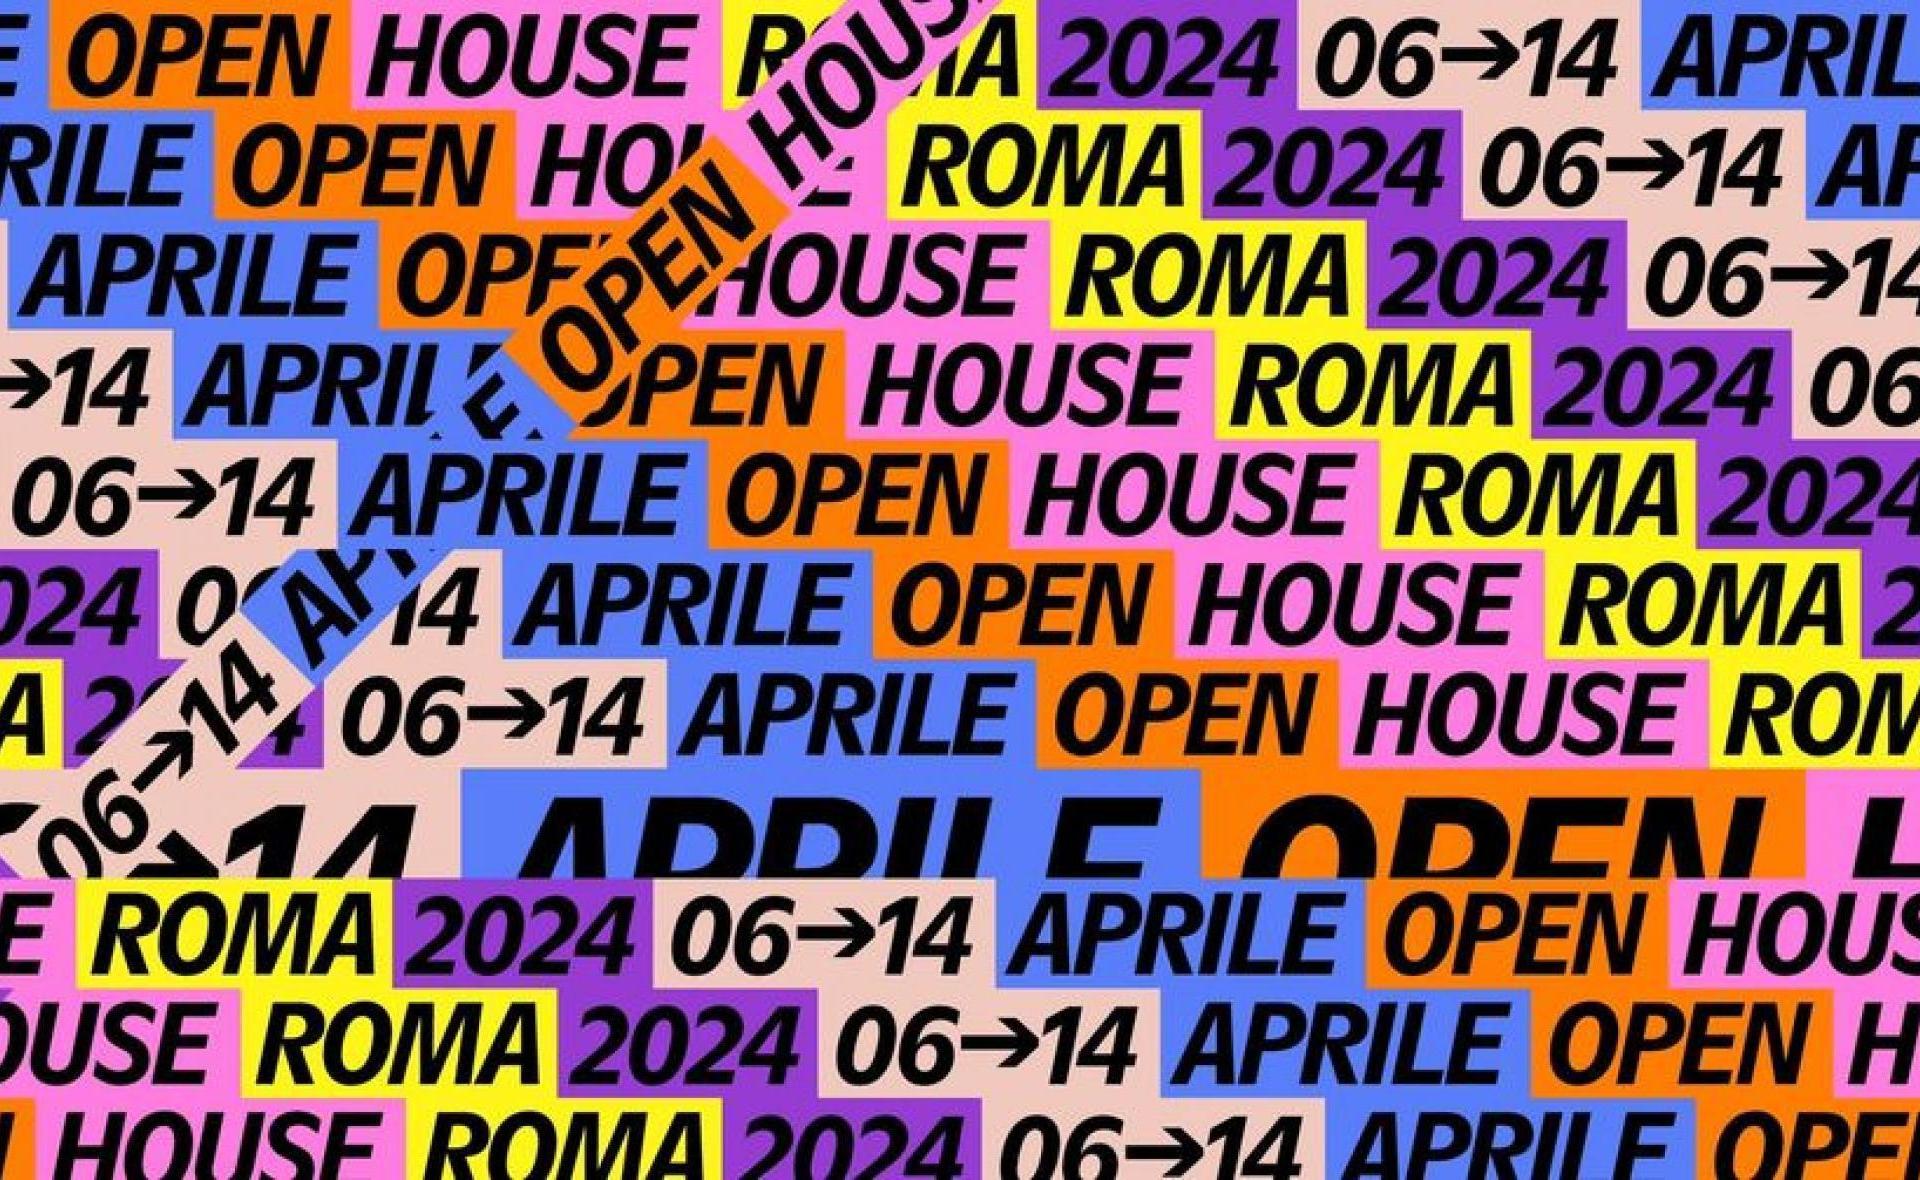 #ohr24 | Open House Roma 2024